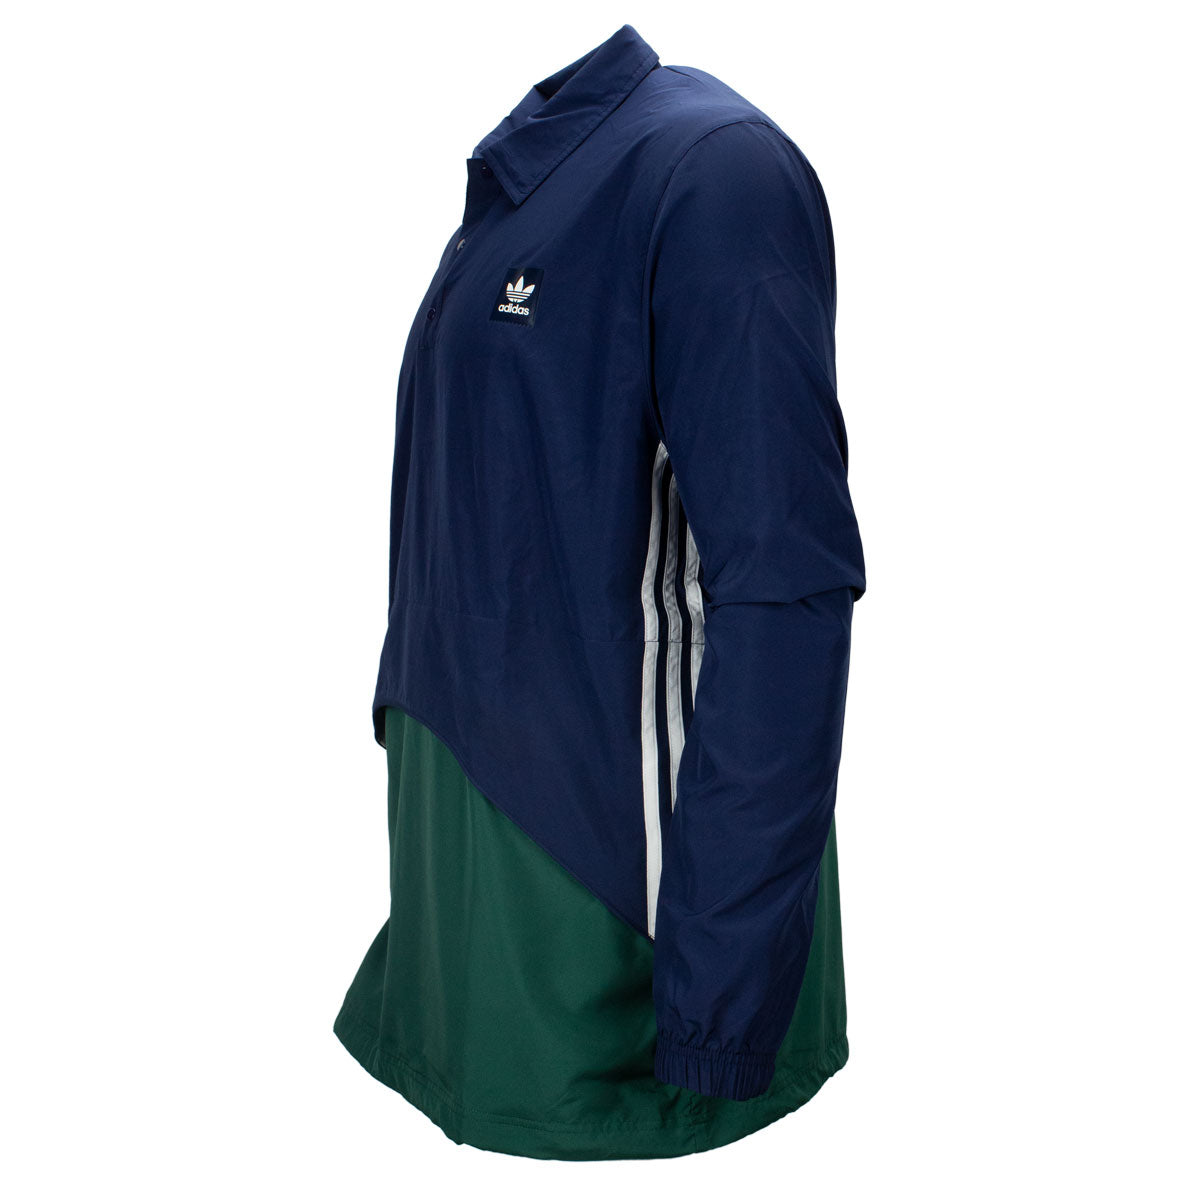 Adidas Originals Pullover Jacket PULOVERJCKT Herren langarm Shirt CE1810 - Brand Dealers Arena e.K. - BDA24